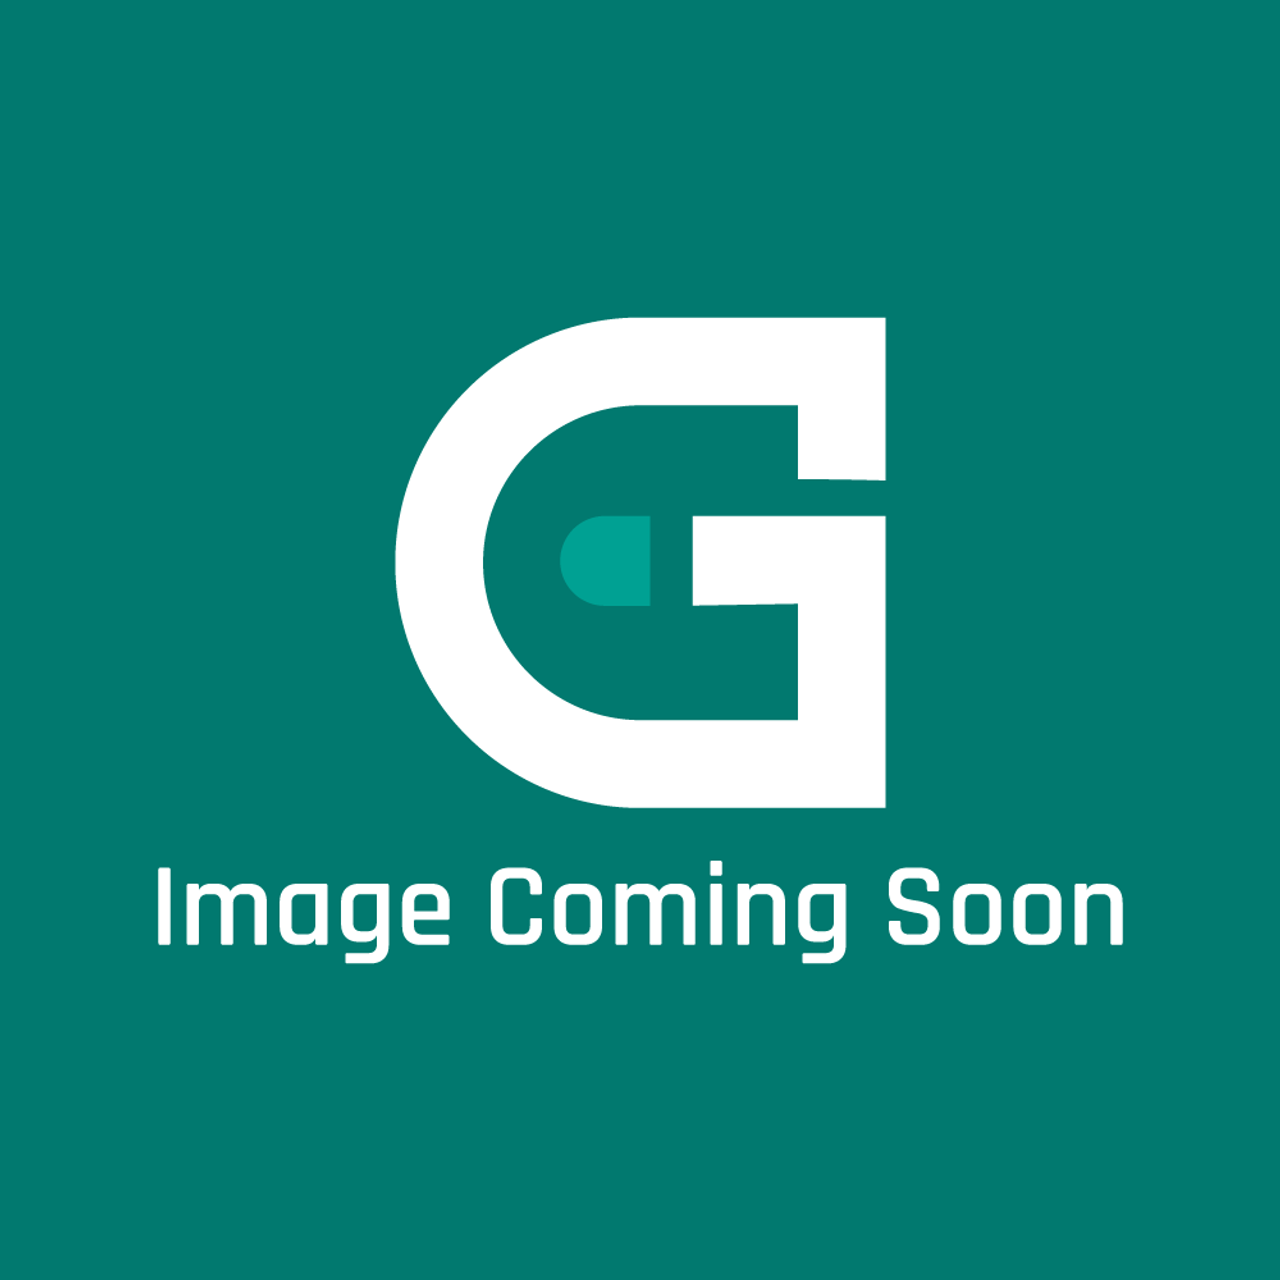 GE Appliances 81W37 - 607421-06 X13 3/4Hp Motor - Programmed - Image Coming Soon!